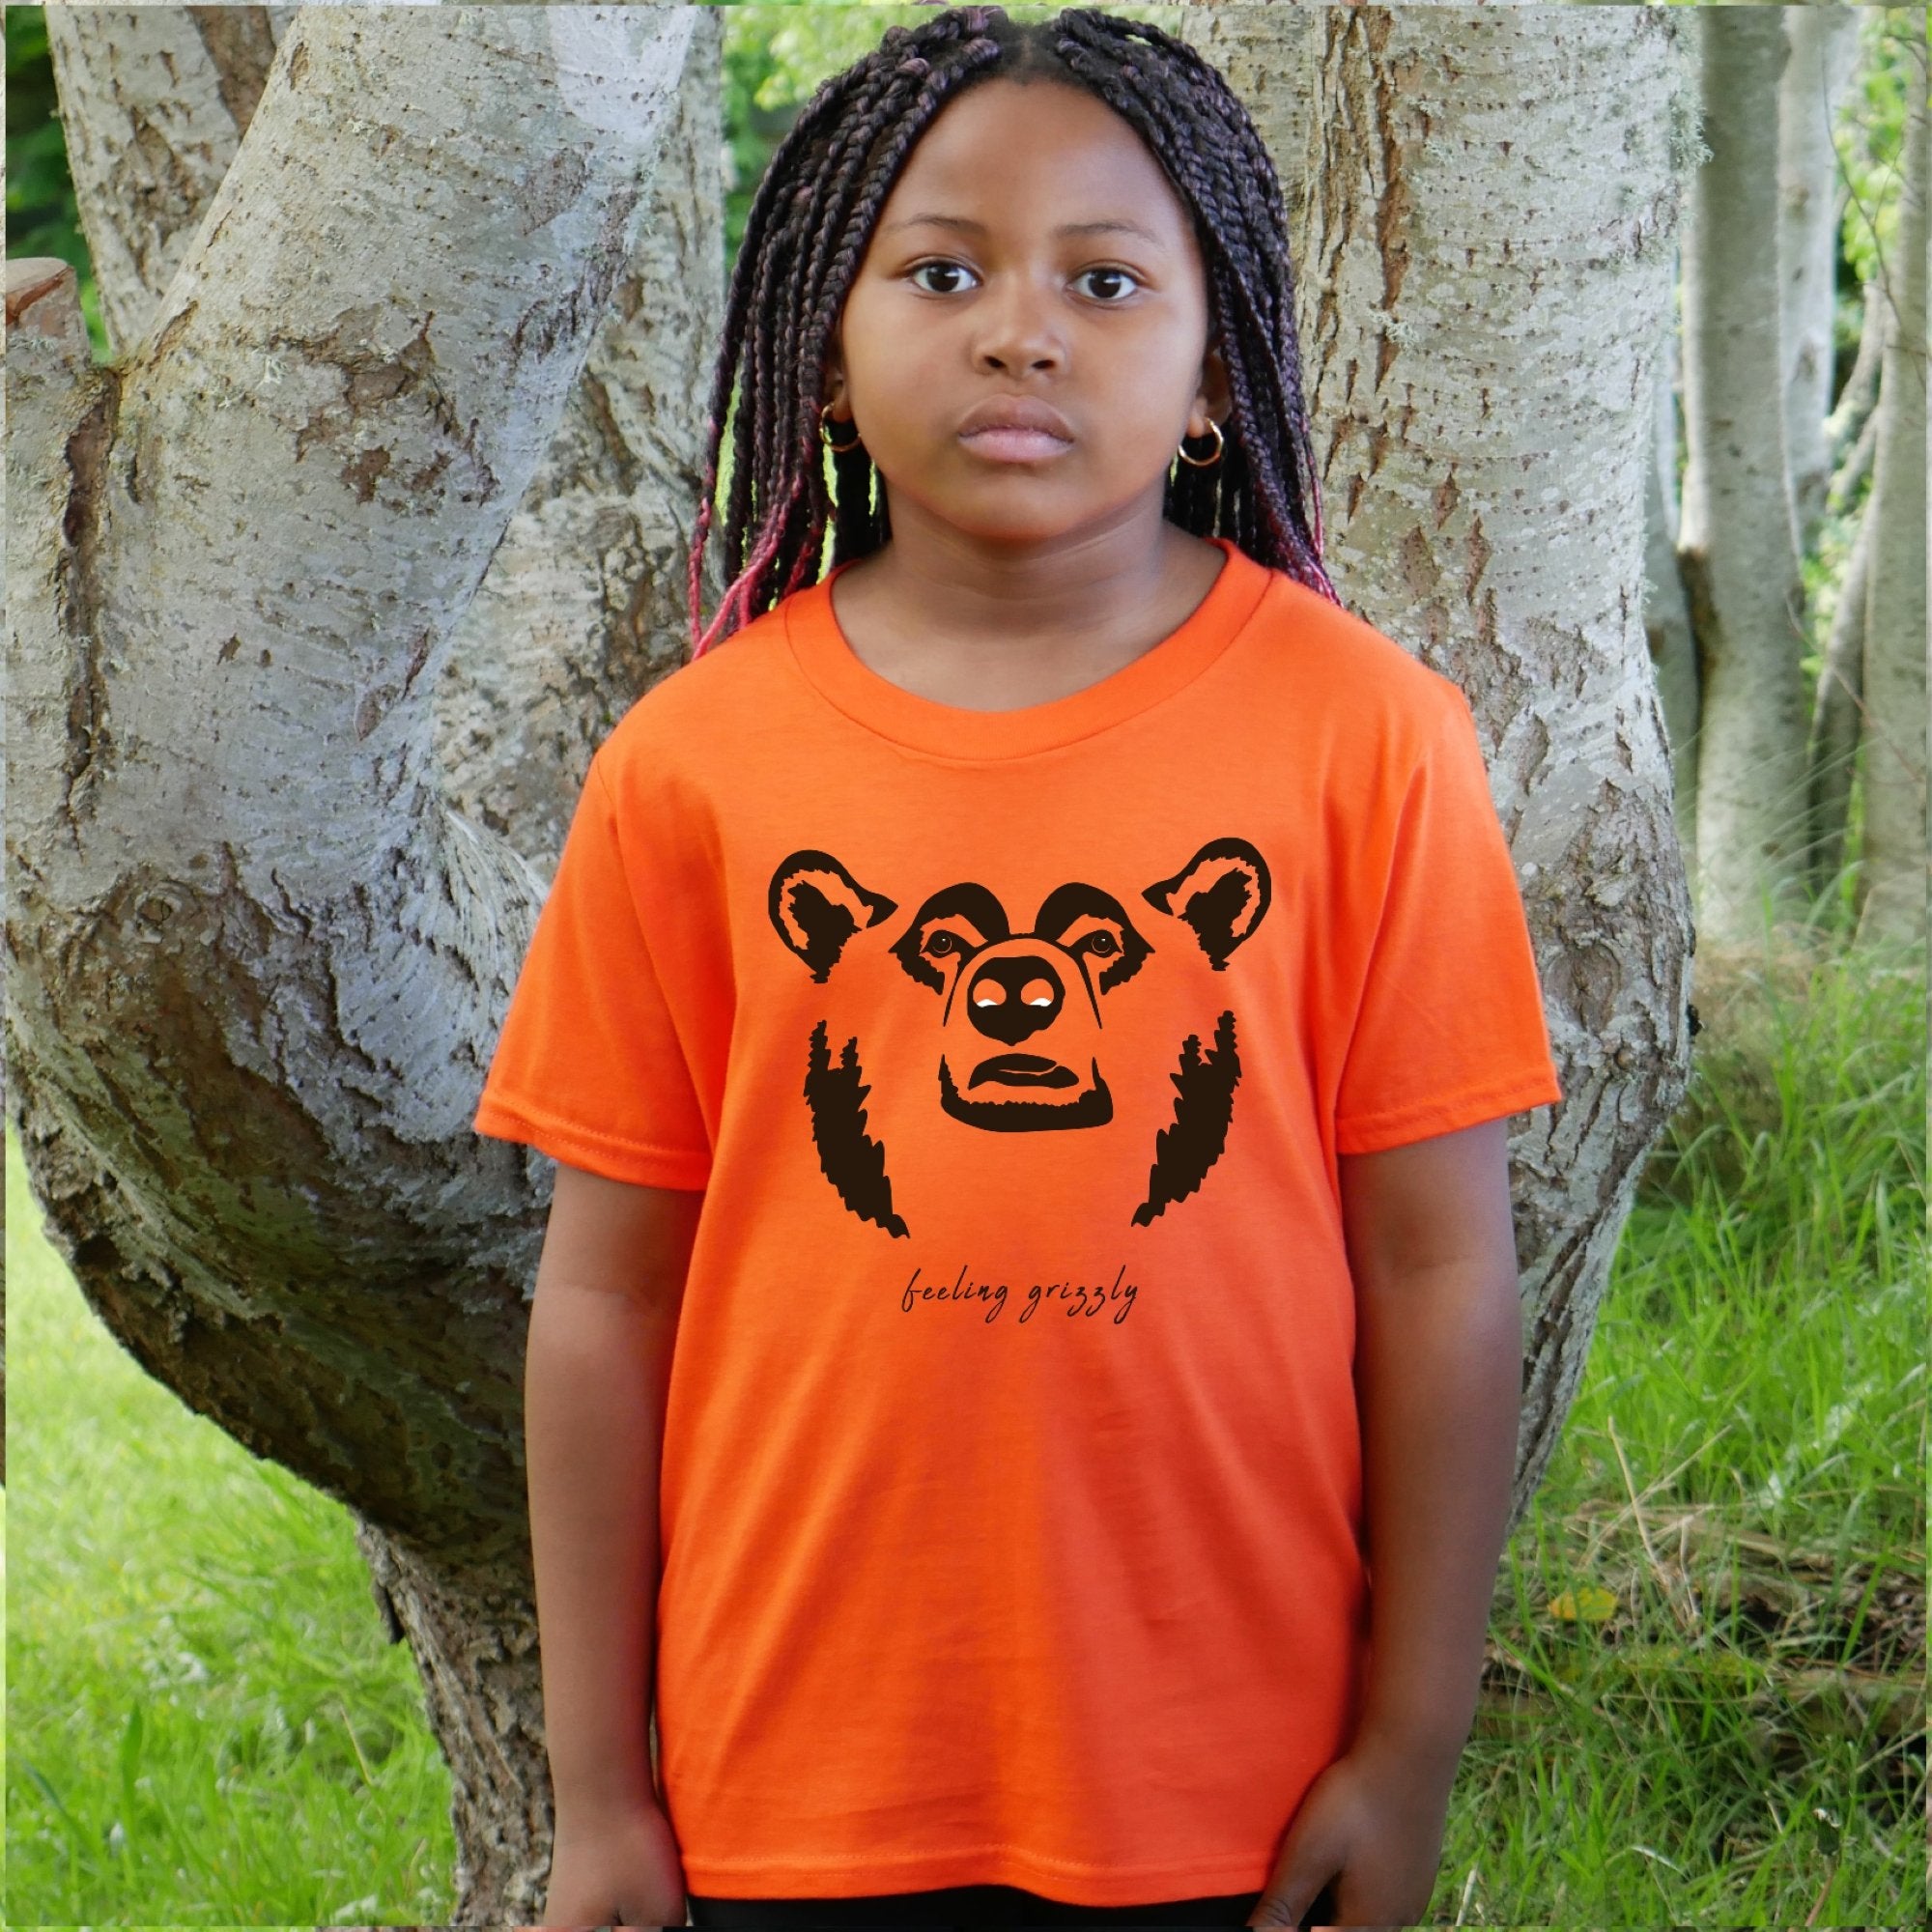 Feeling Grizzly - Unisex Kids T-Shirt - Scarf Monkey